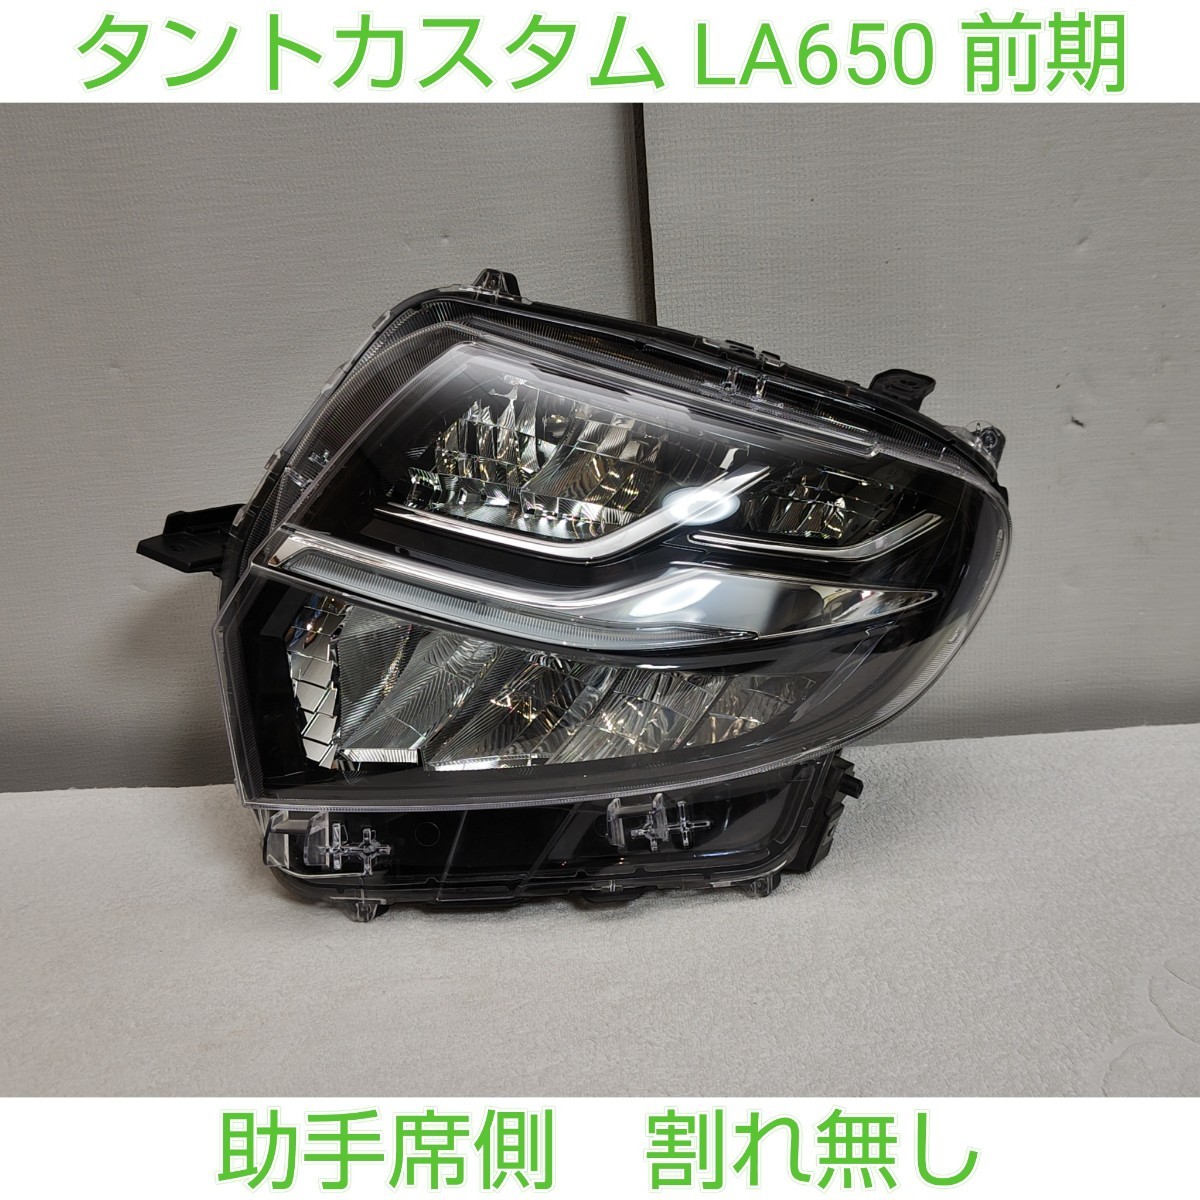 DAIHATSU ダイハツ タント TANTO タントカスタム LA650s 前期 純正 LED ヘッドライト ヘッドランプ 助手席側 左側 左 LH koito100-69075 _画像1